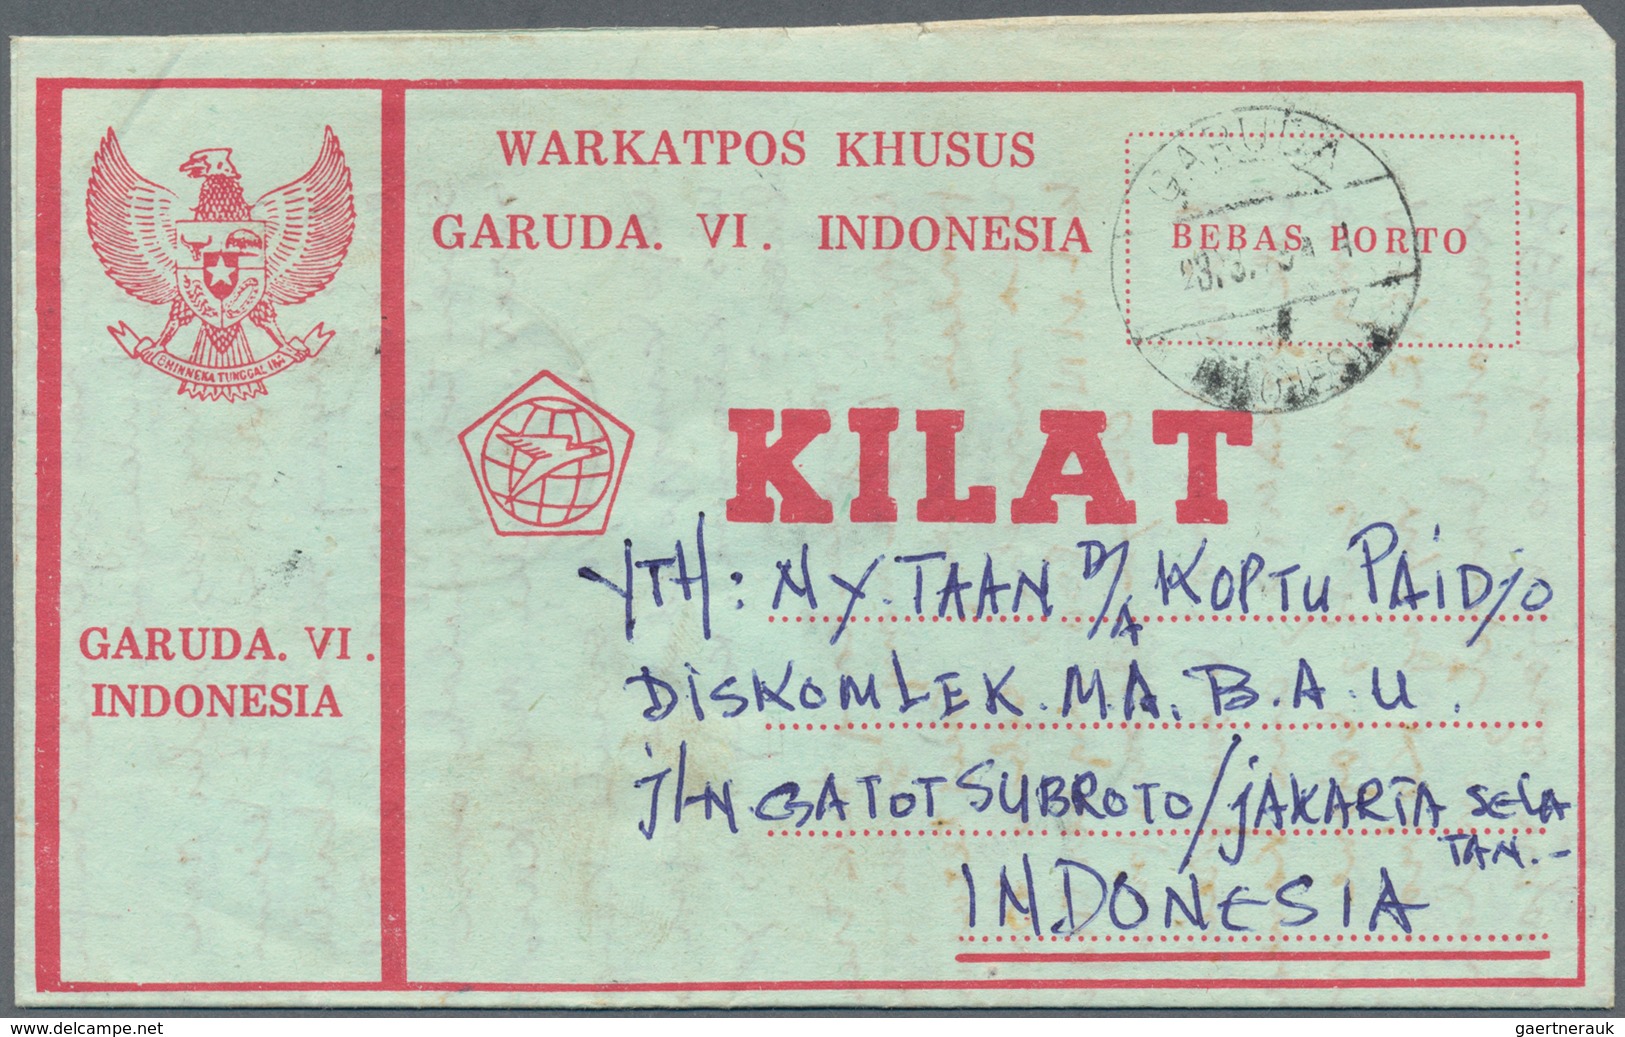 22784 Indonesien: 1950/76, military / UN peacekeeping / govt. service special envelopes collection: Milita